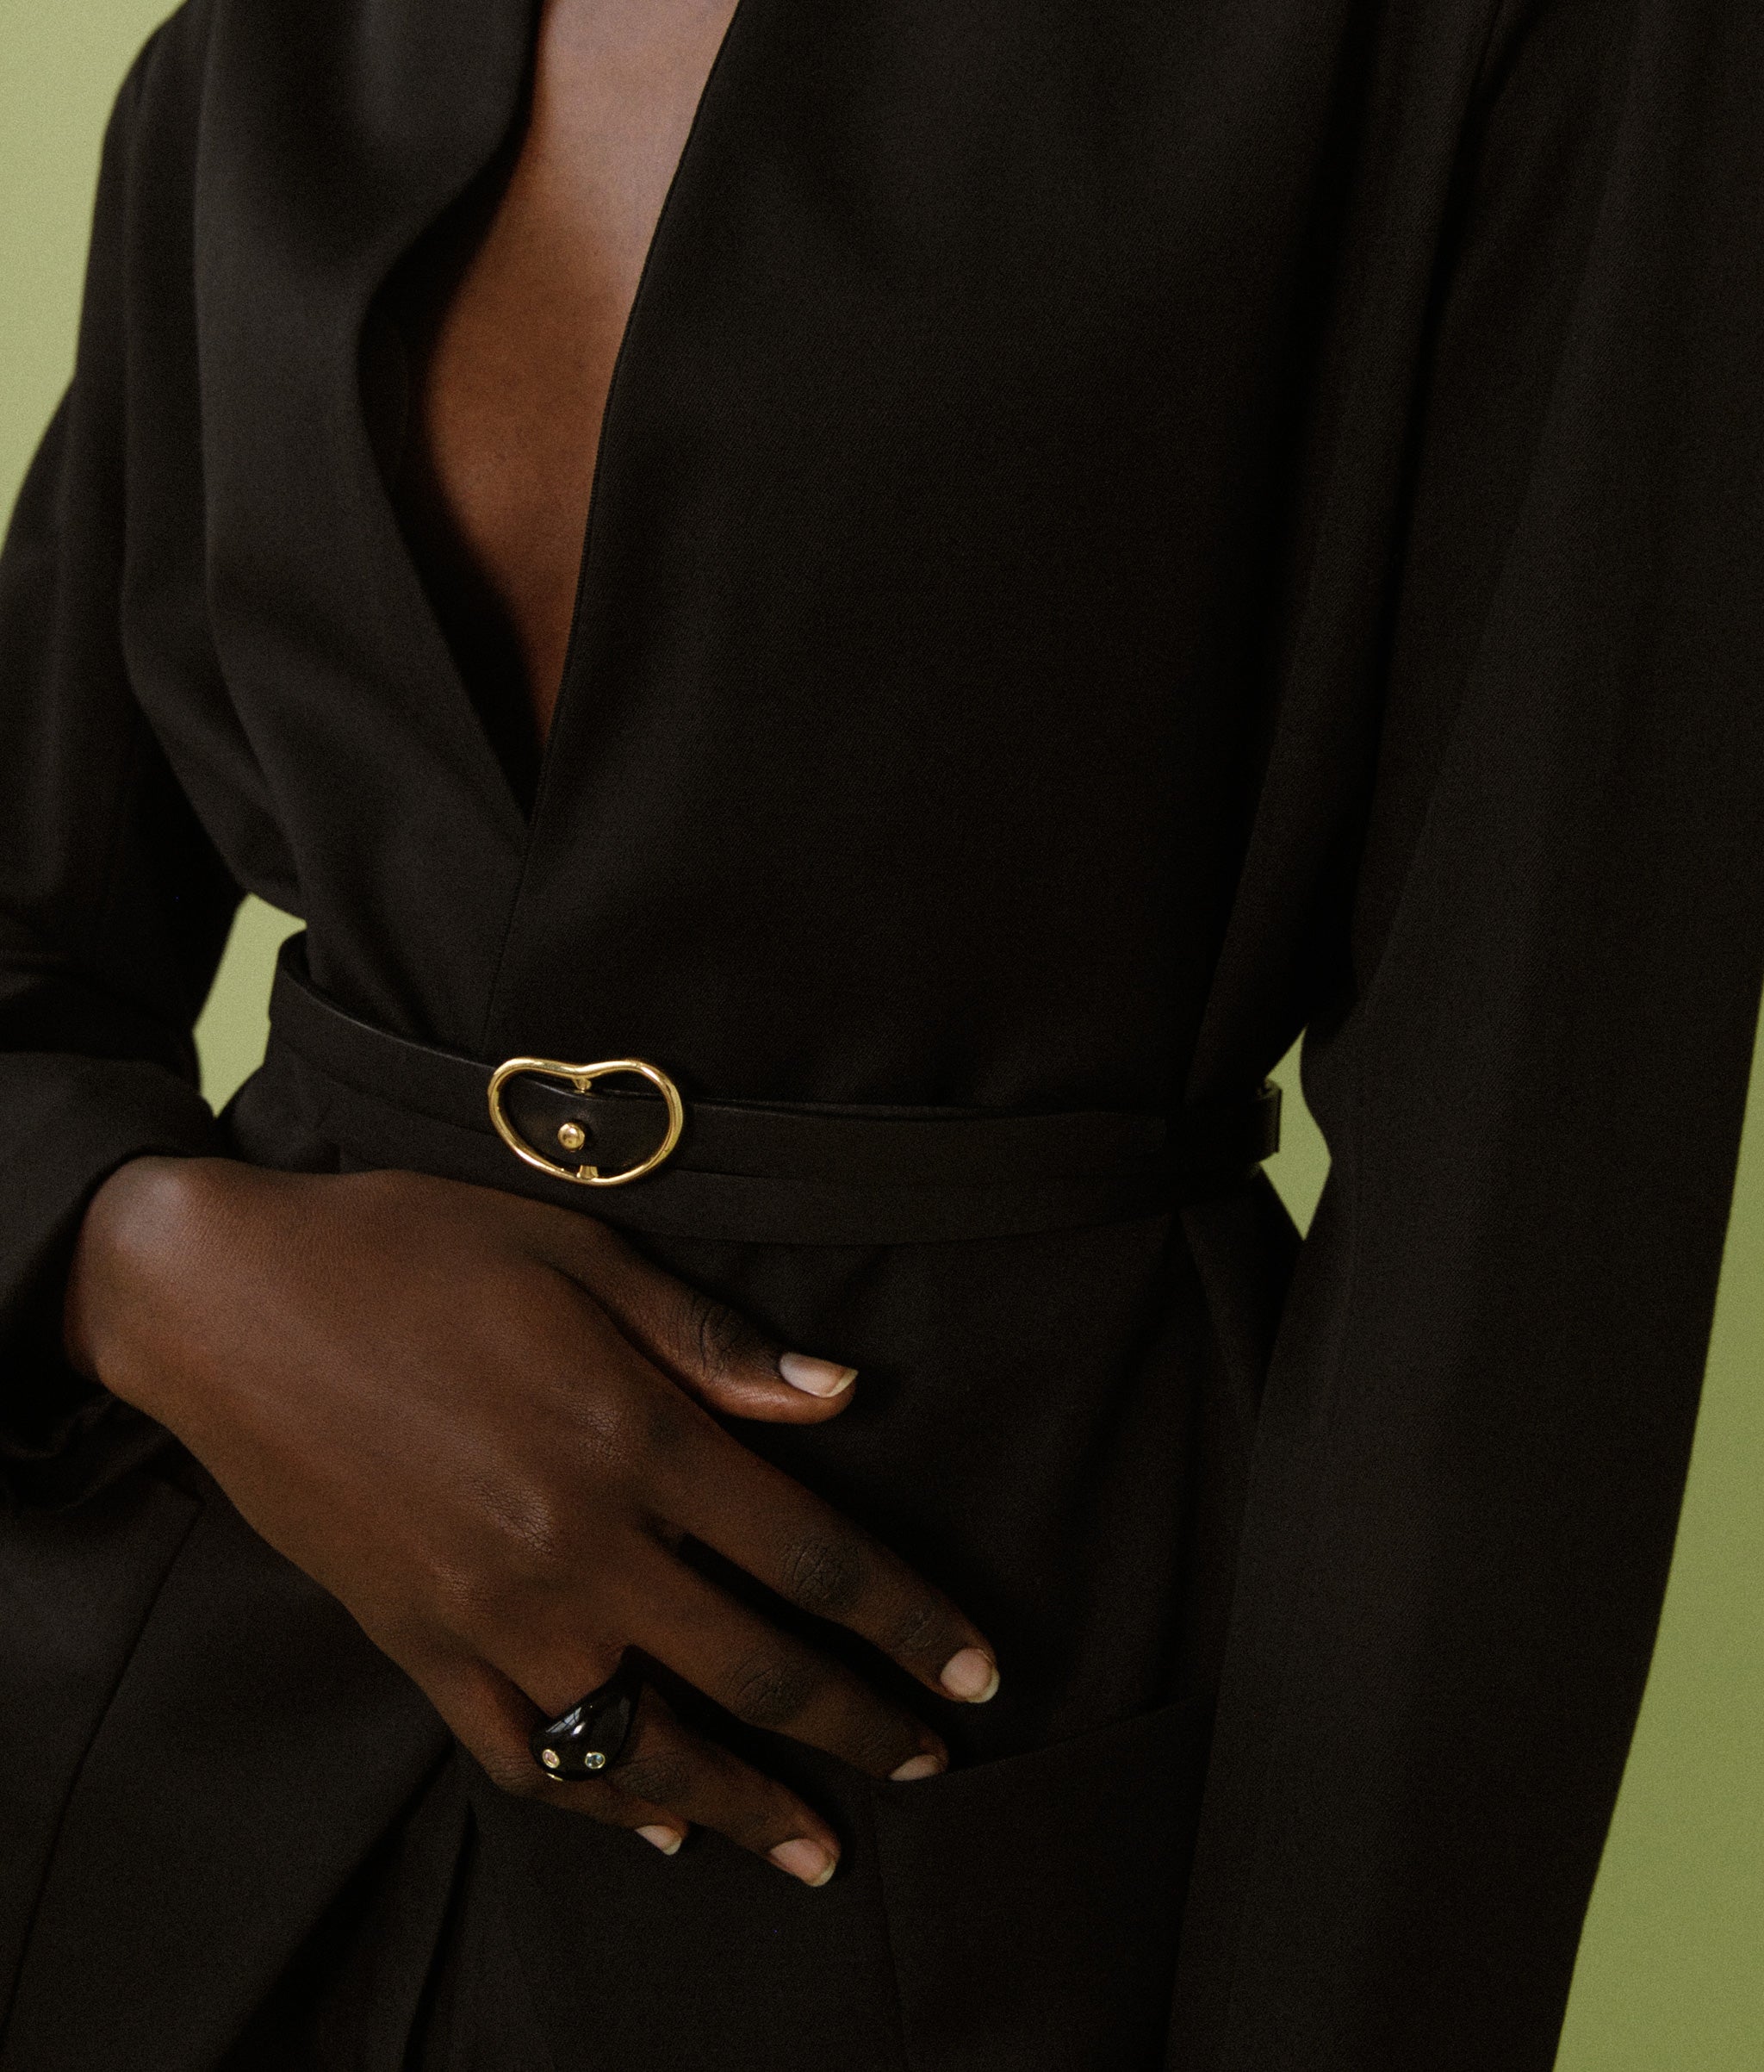 Model's torso in close-up, in black blazer and Double Wrap Georgia Belt in Black.